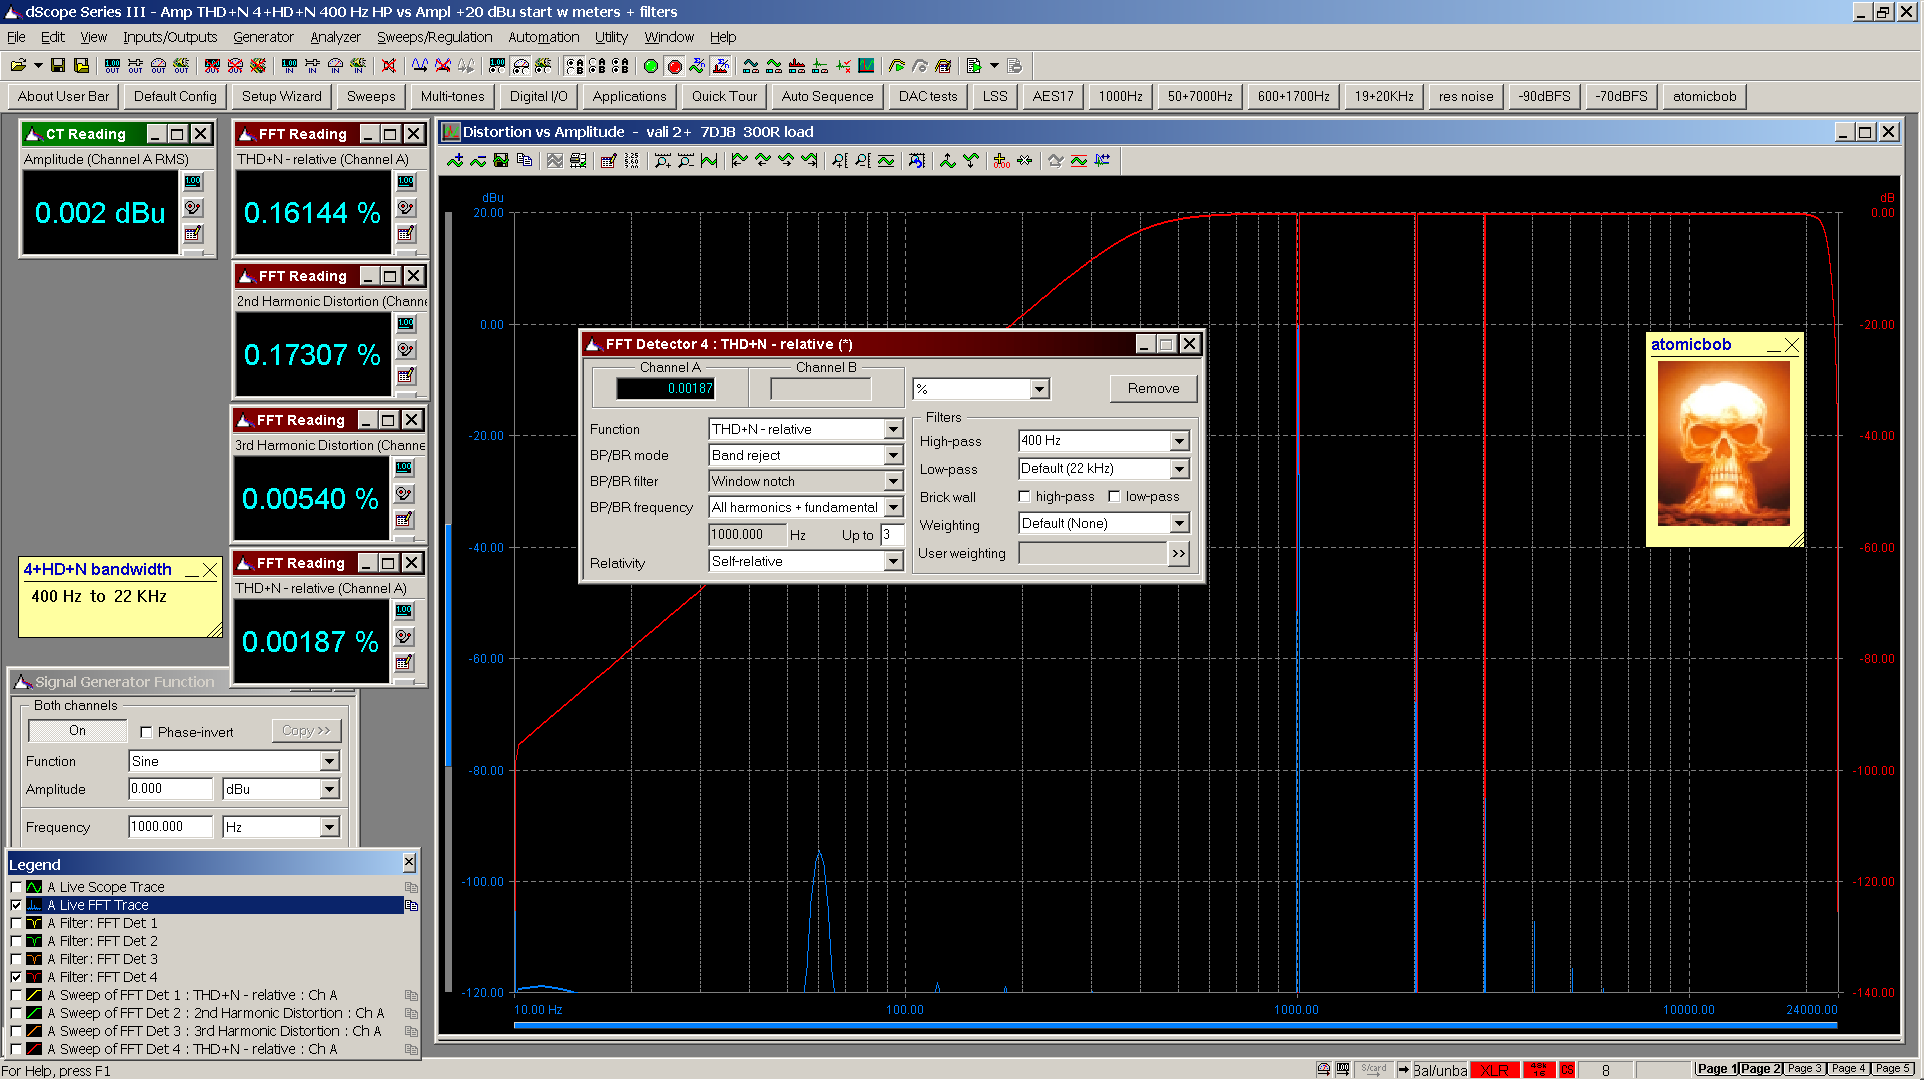 05 20220515 1 KHz distortion vs amp analyzer settings 4+HD+N window notch.png